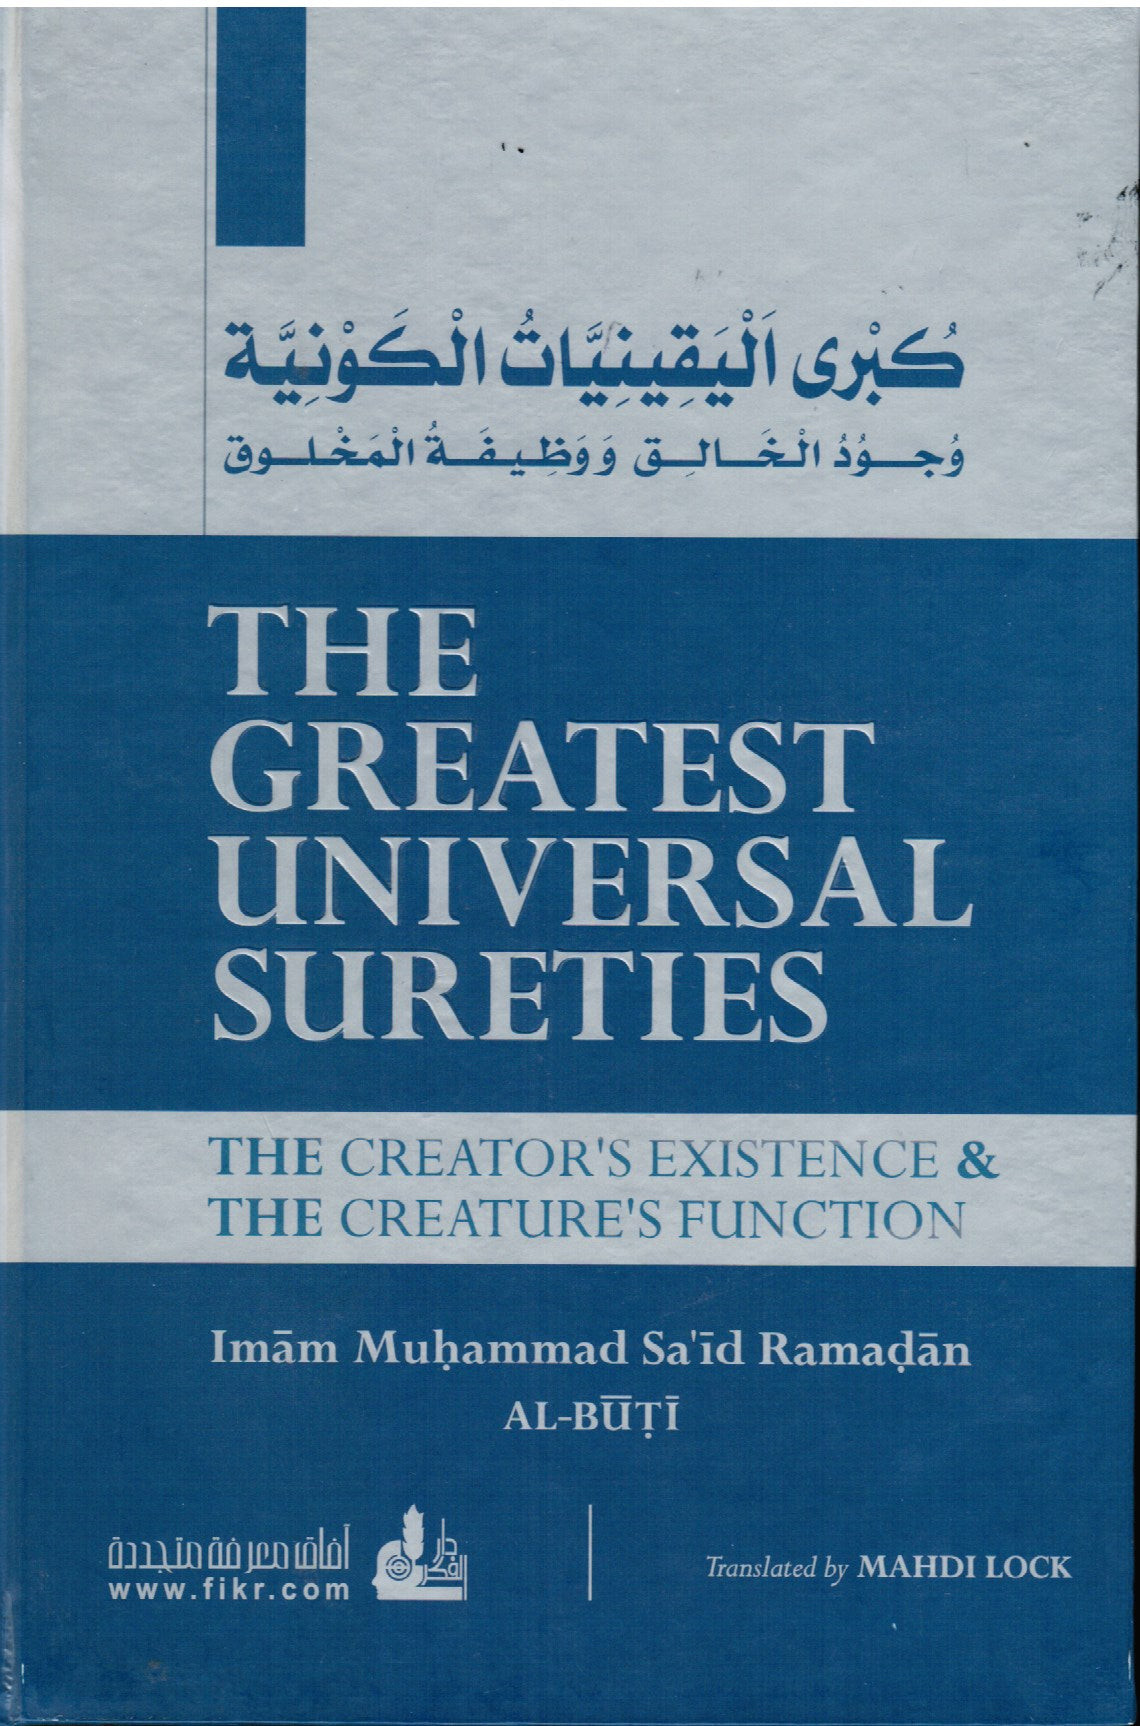 The Greatest Universal Sureties